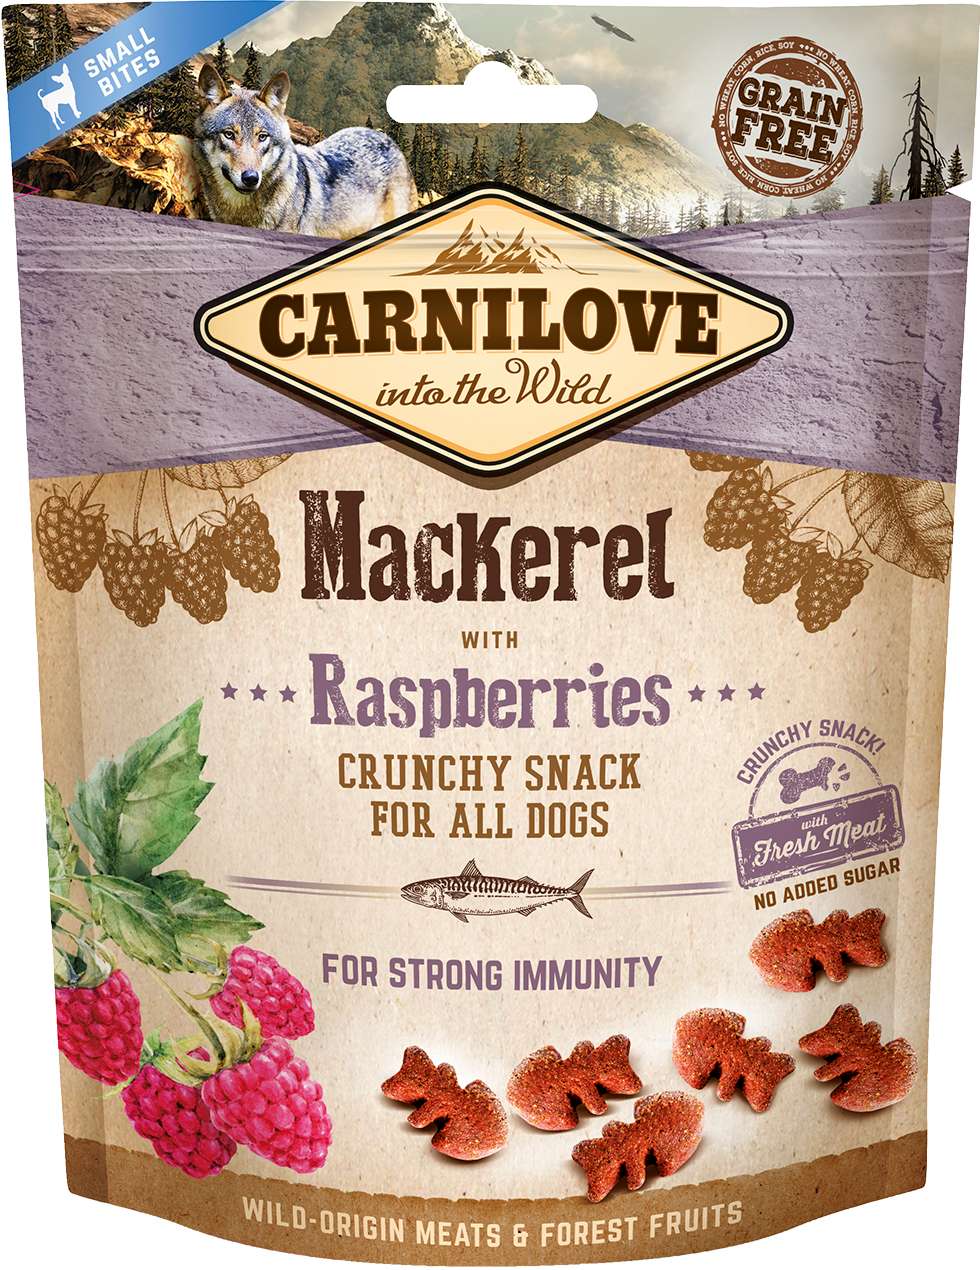 Crunchy snack Mackerel & Raspberries